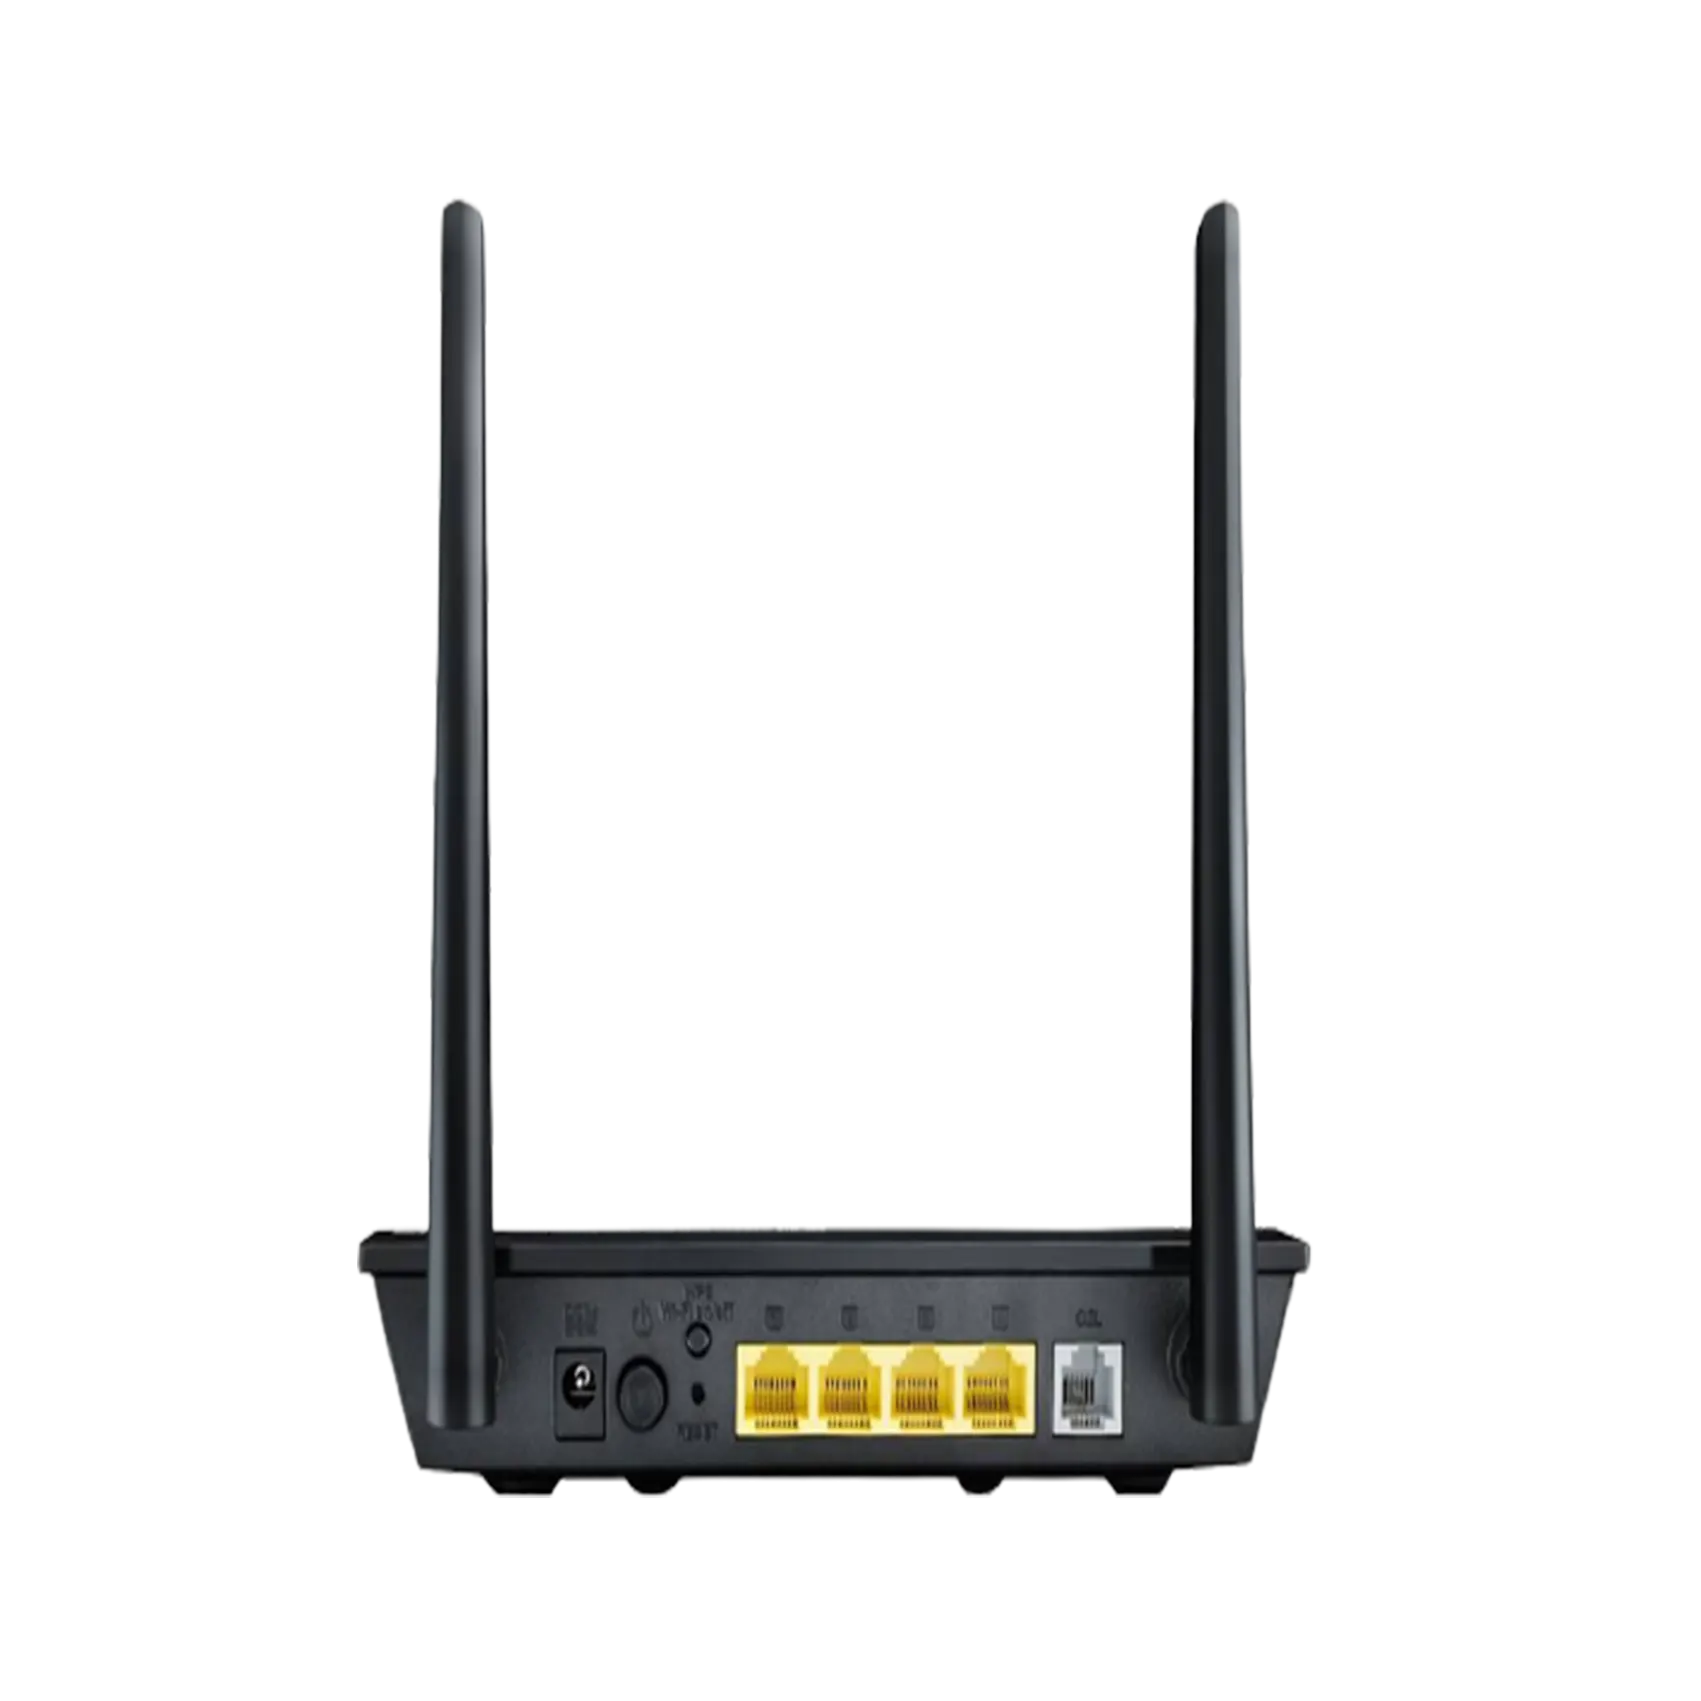 مودم روتر بی سیم ایسوس مدل DSL-N16 دو آنتن ADSL/VDSL